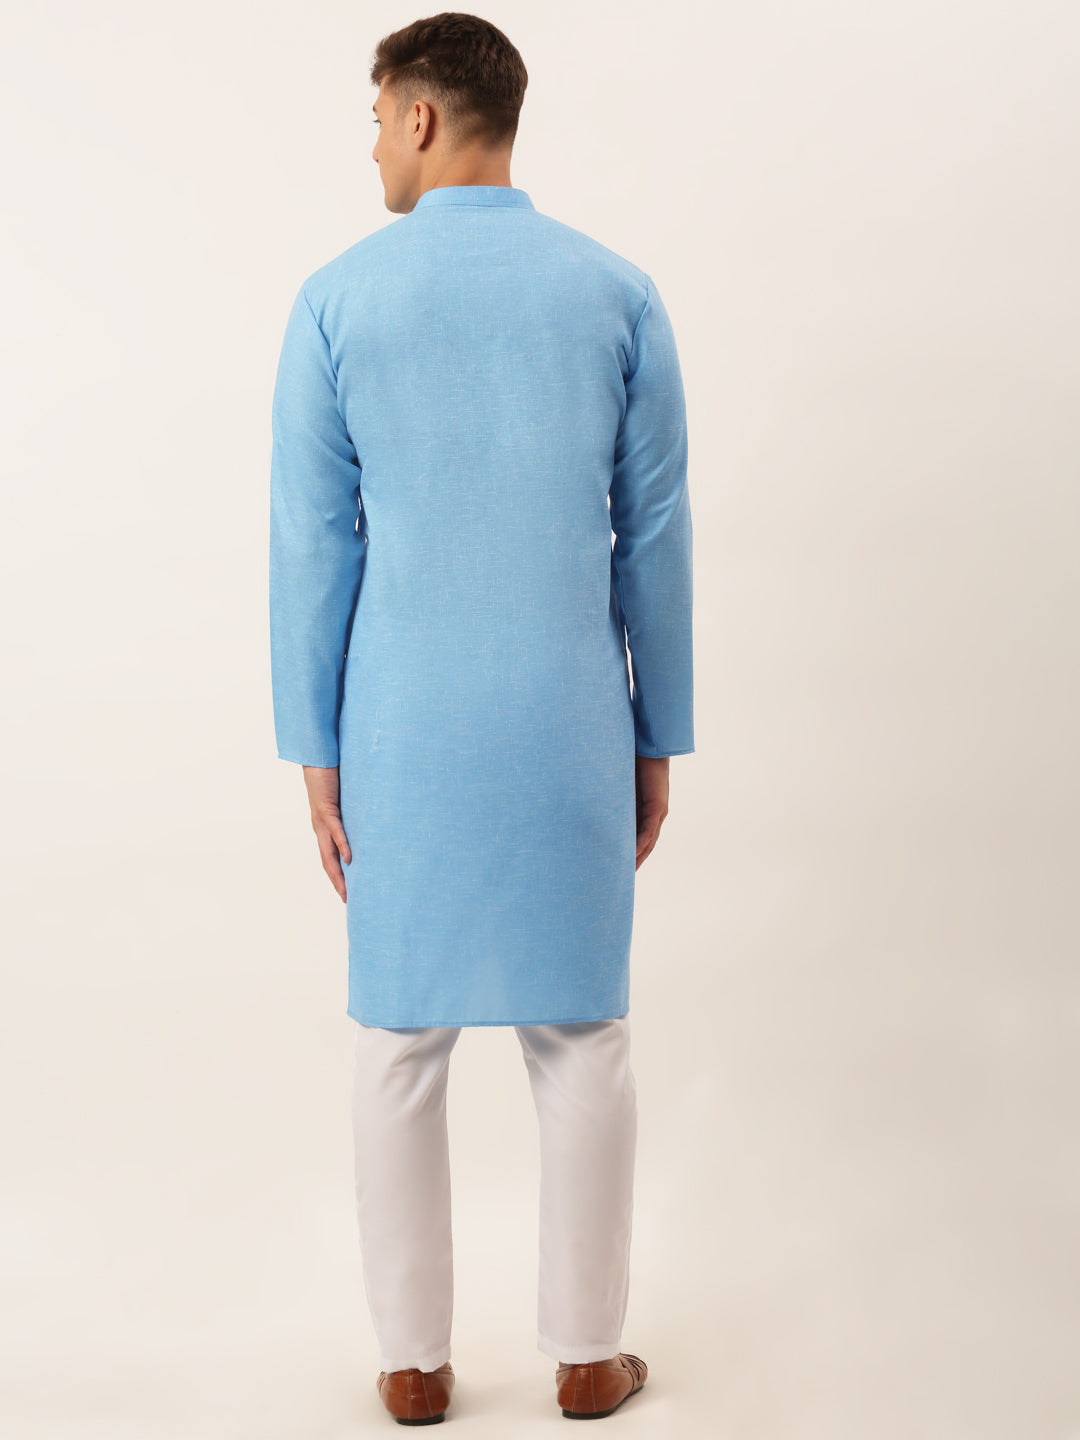 Men's Cotton Solid Kurta Pajama Set